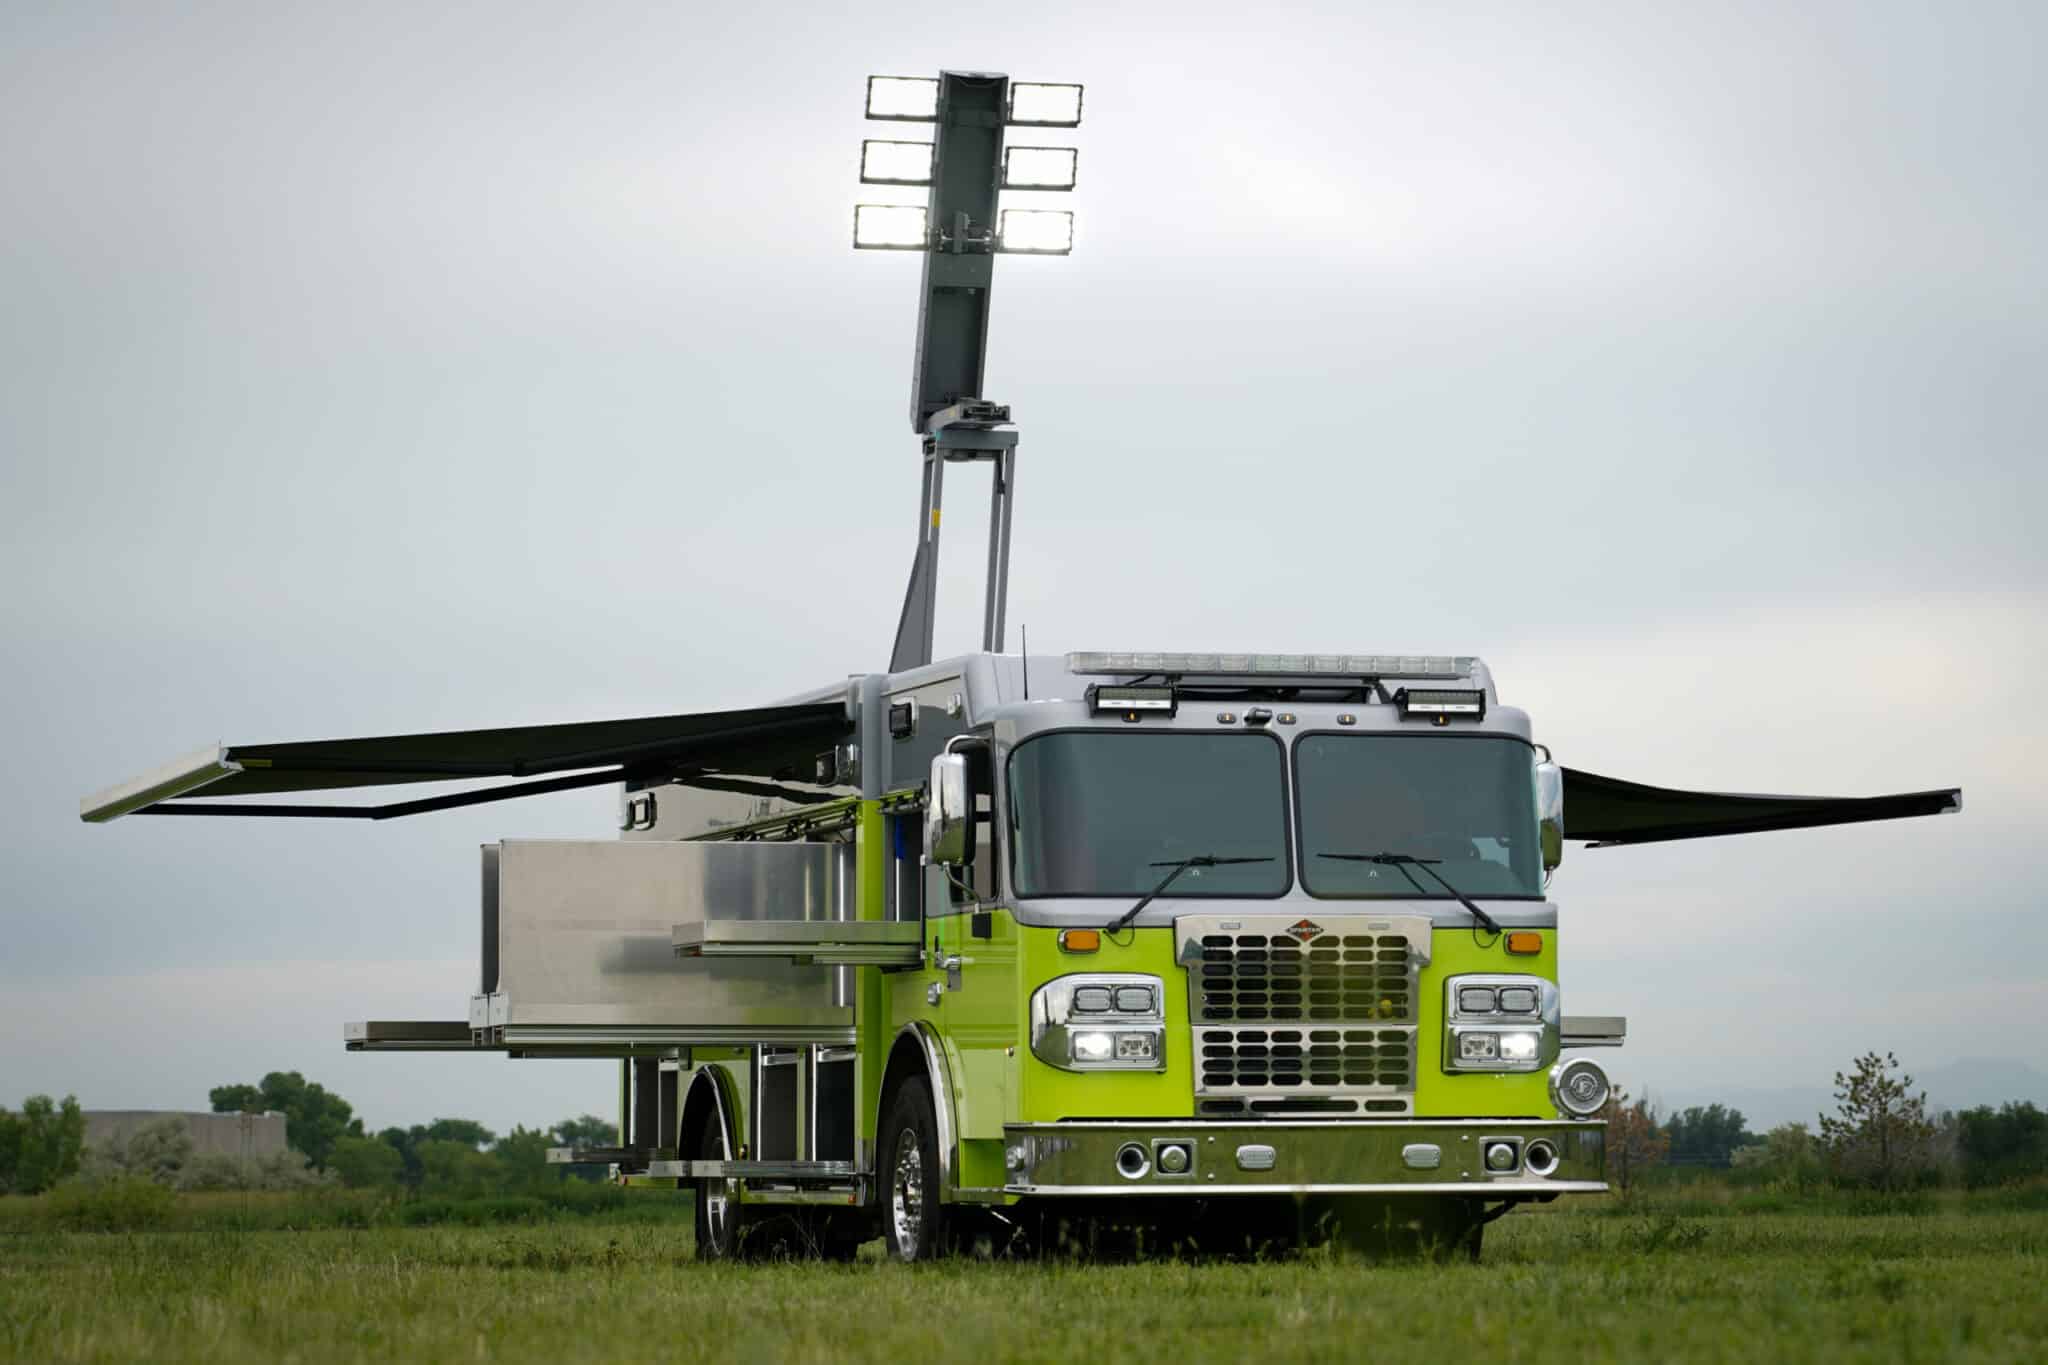 Featured image for “Santa Fe Fire Rescue, Santa Fe (TX) Air/Light Unit #1233”